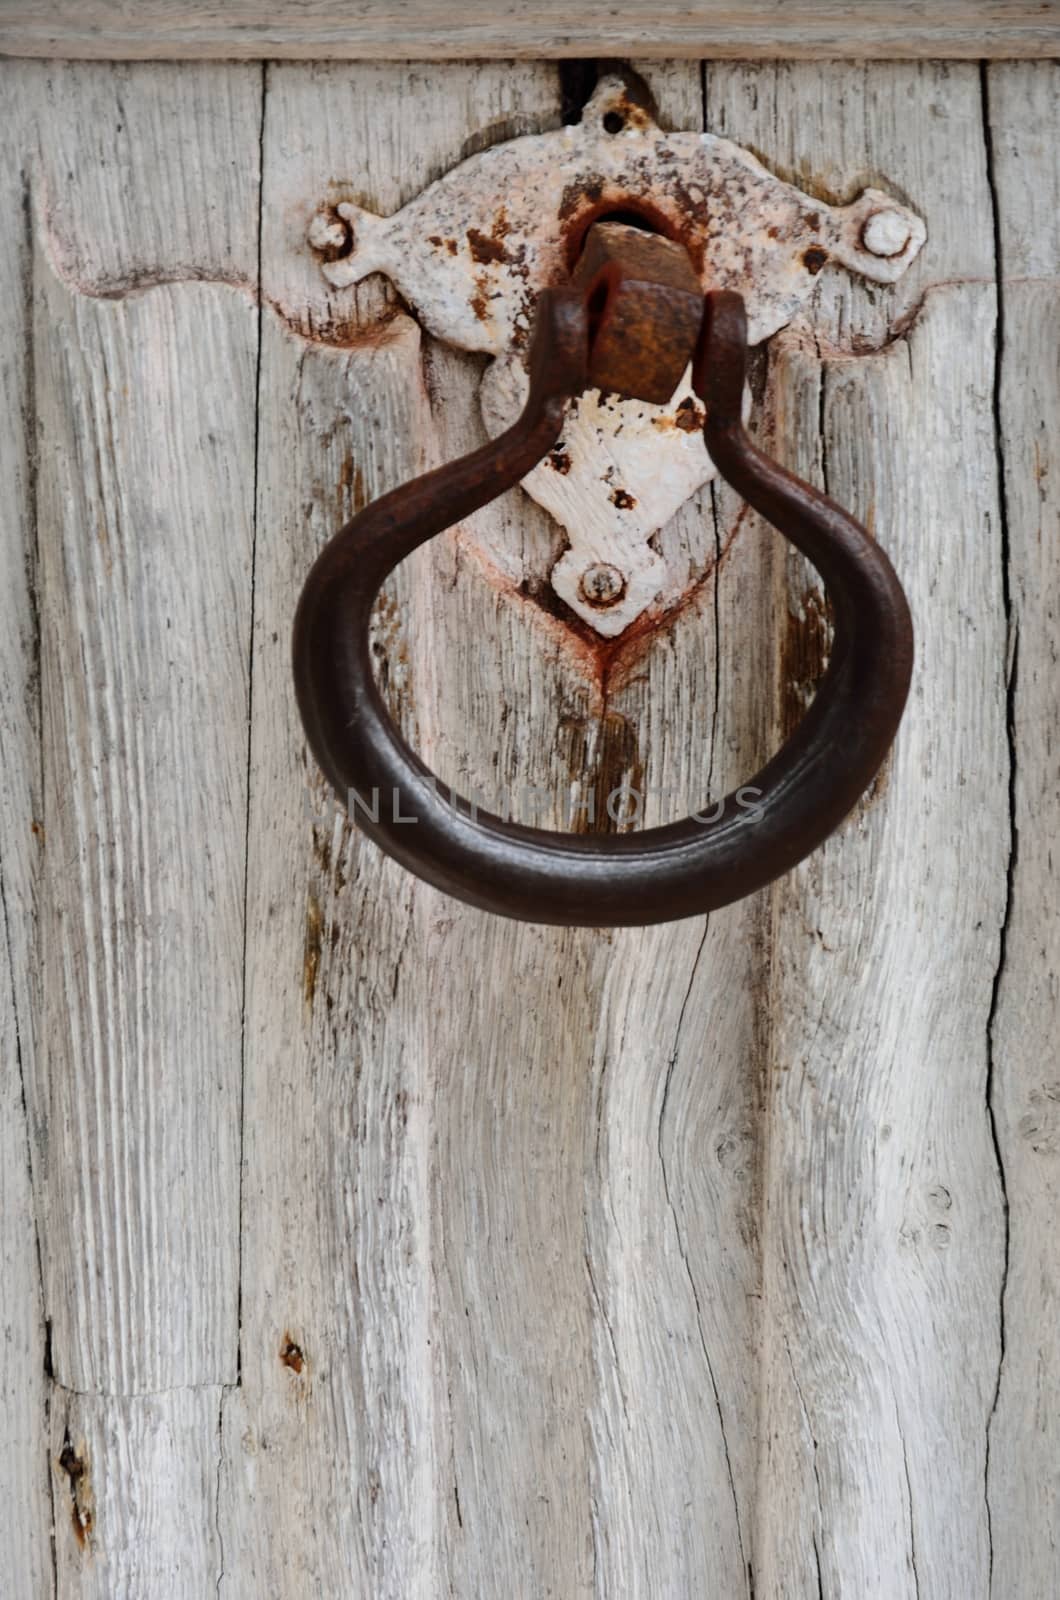 old rusty door knocker by pauws99